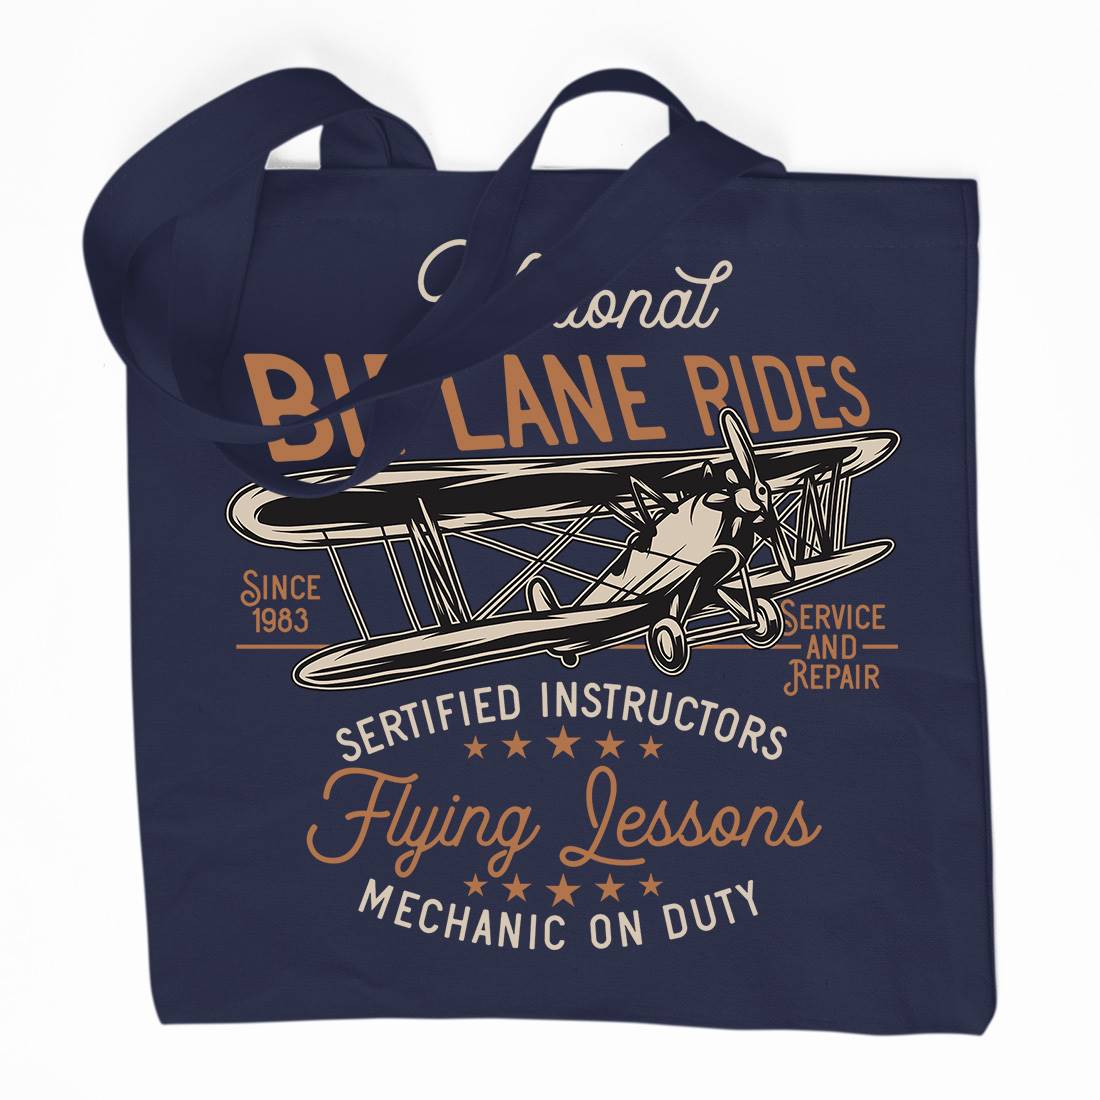 Biplane Rides Organic Premium Cotton Tote Bag Vehicles D910